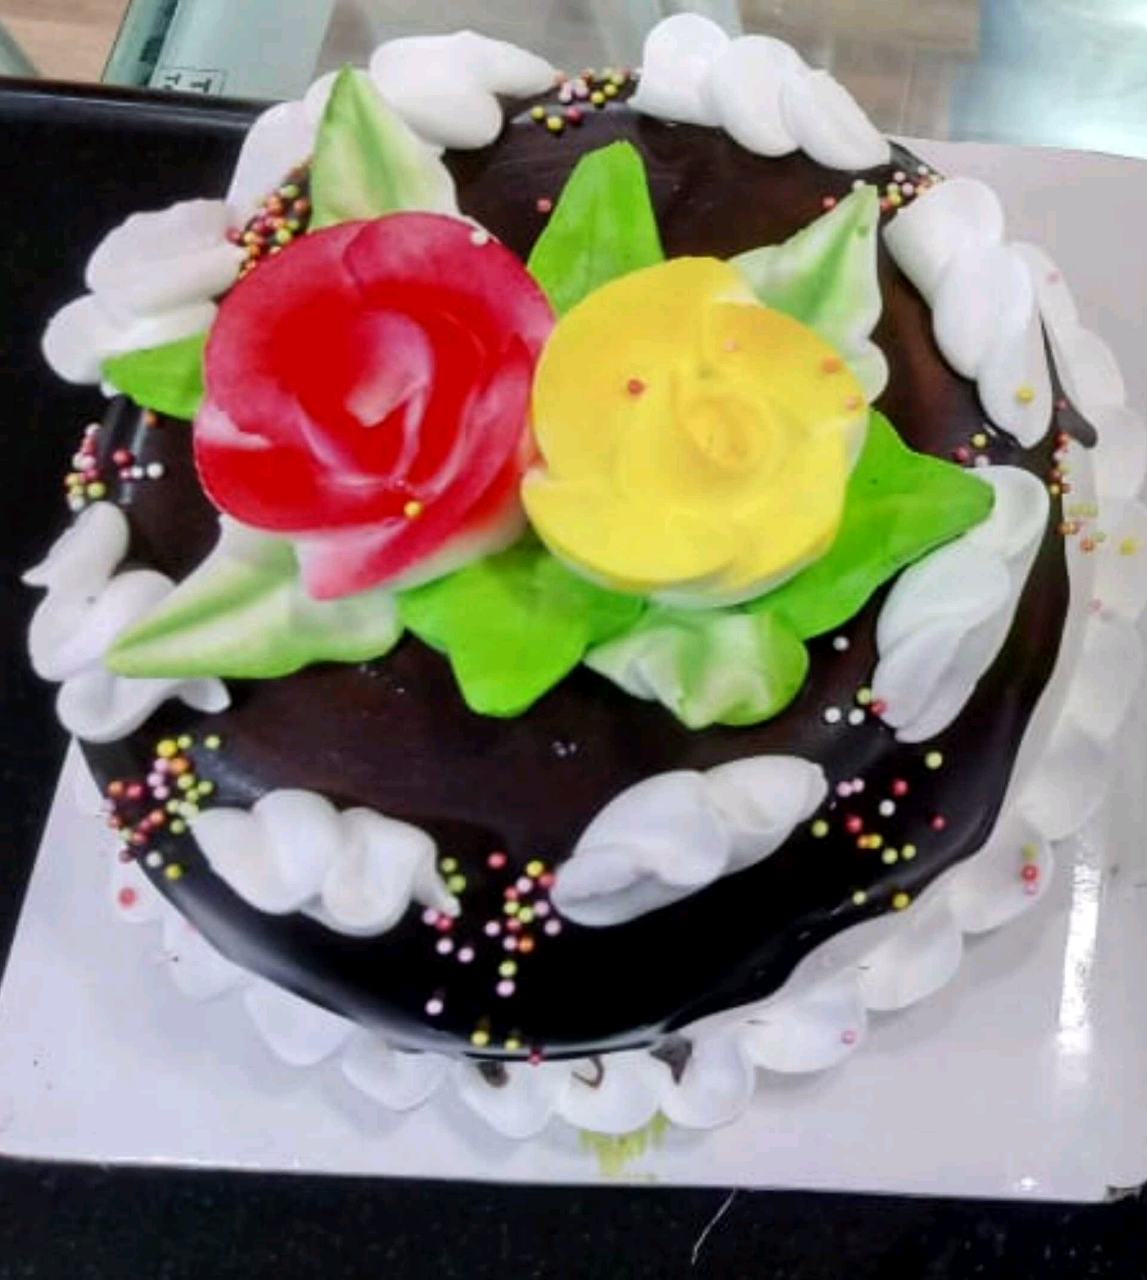 Eggless Chocolate Cake